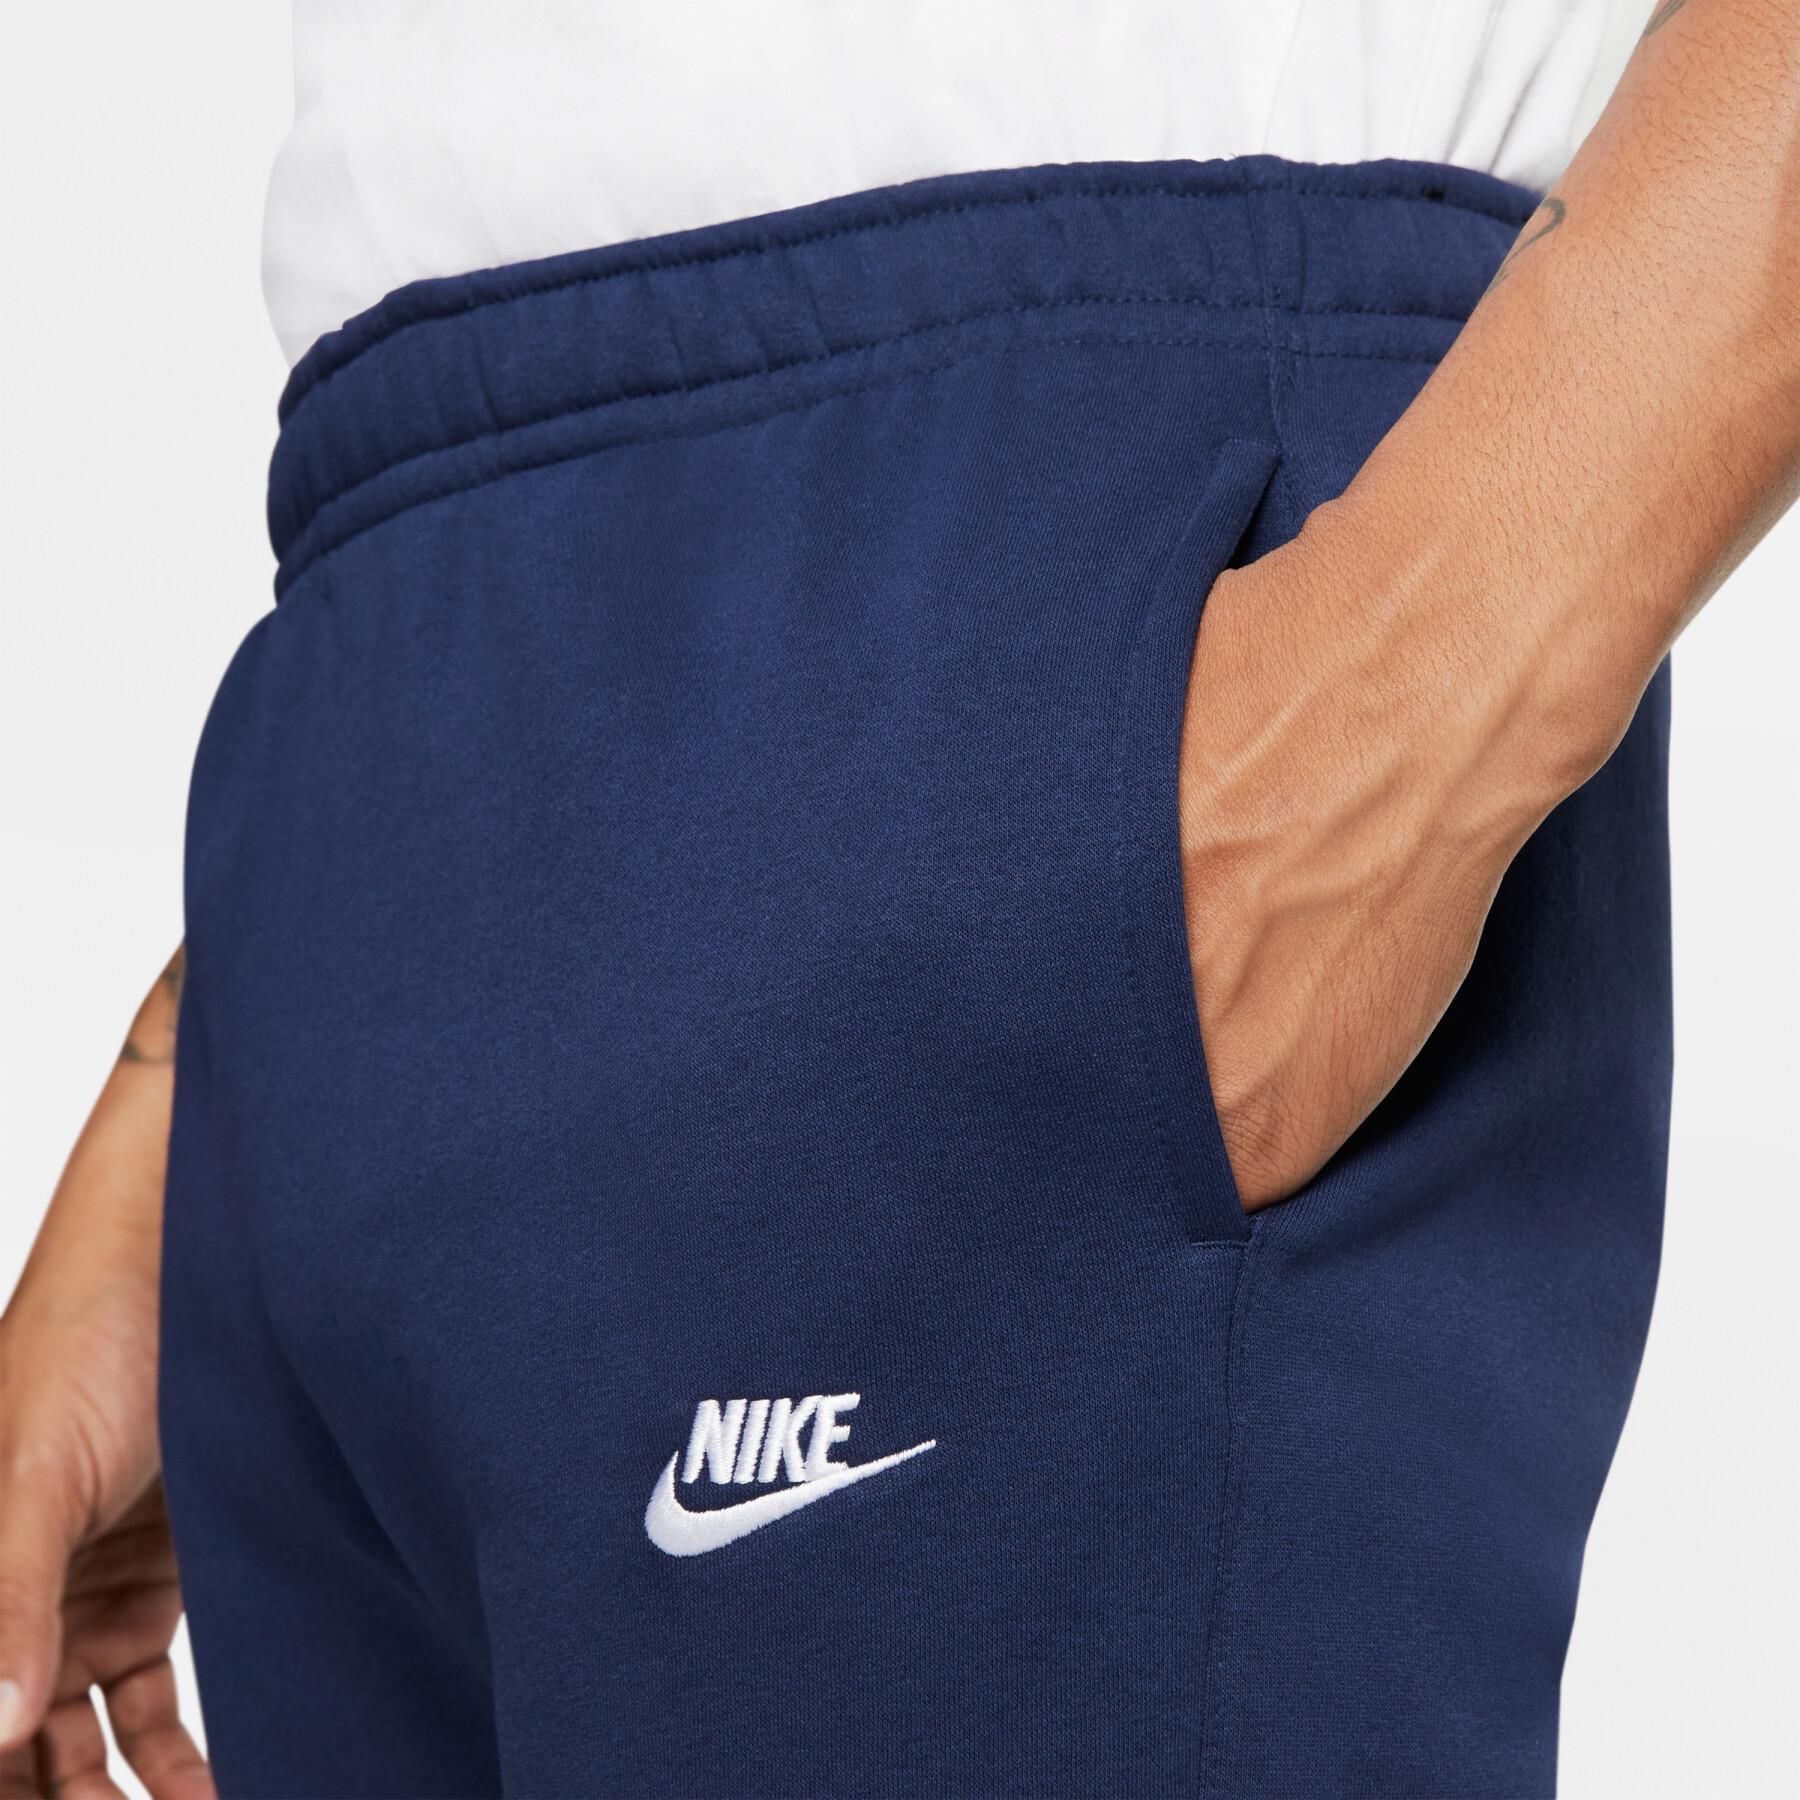 Mesh jogging suit Nike Sportswear Club